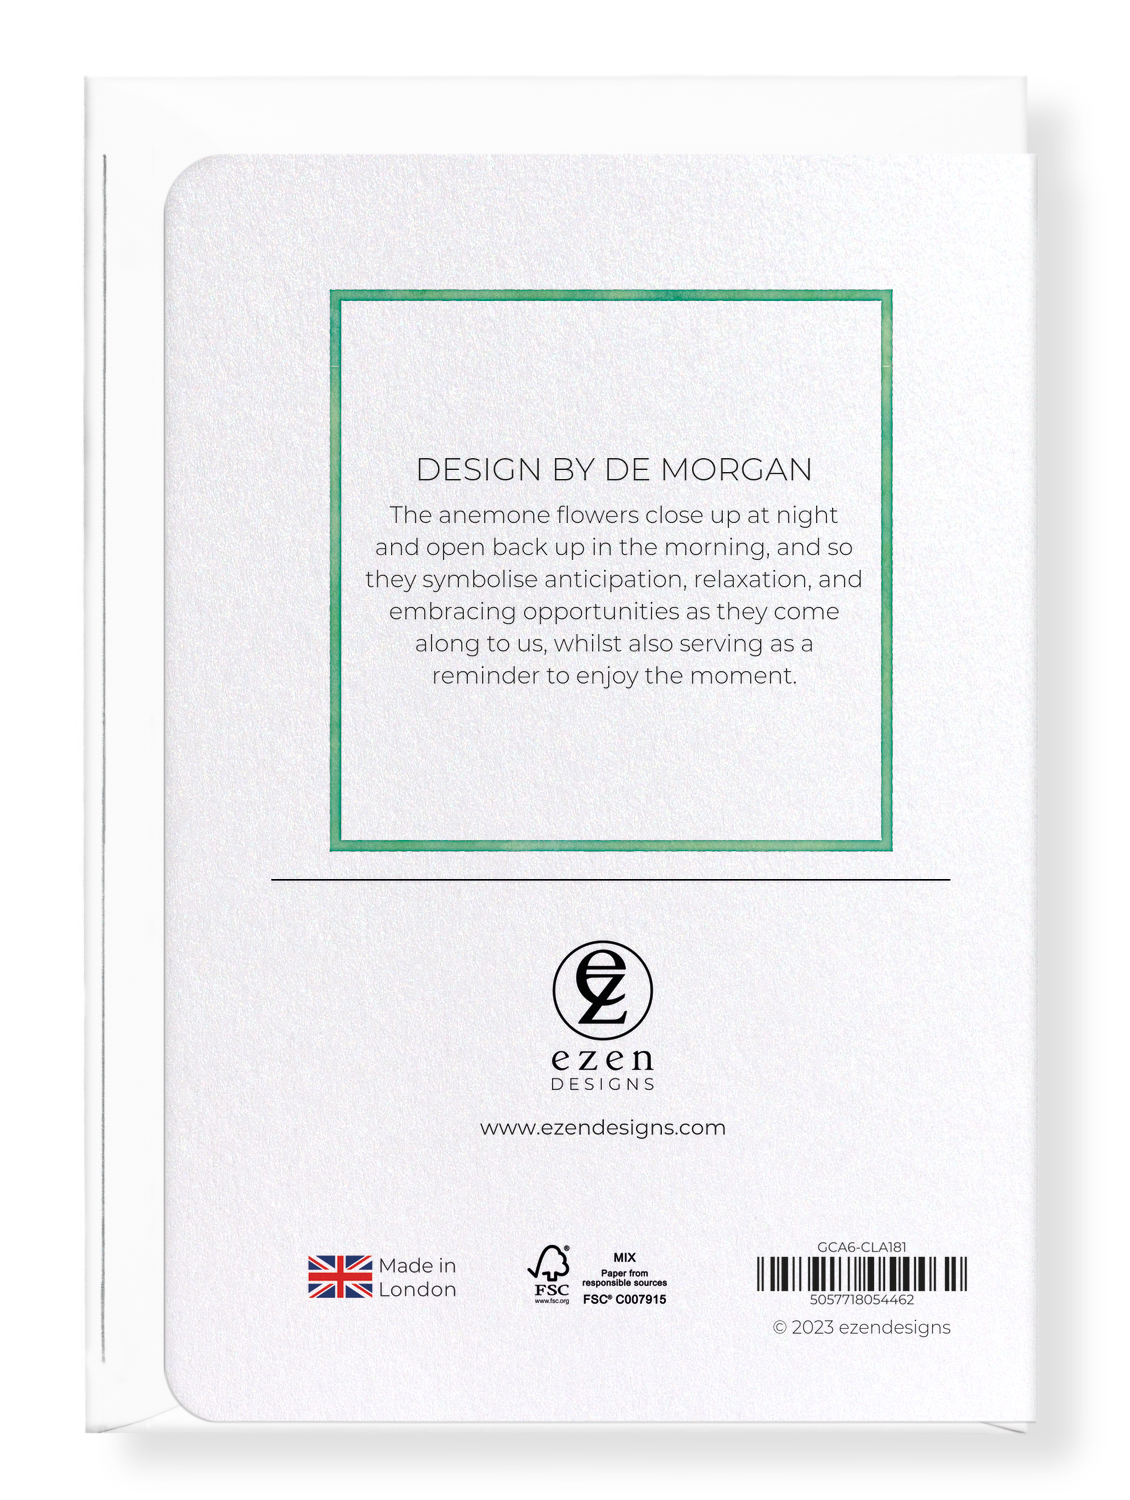 Ezen Designs - Design by de morgan - Greeting Card - Back